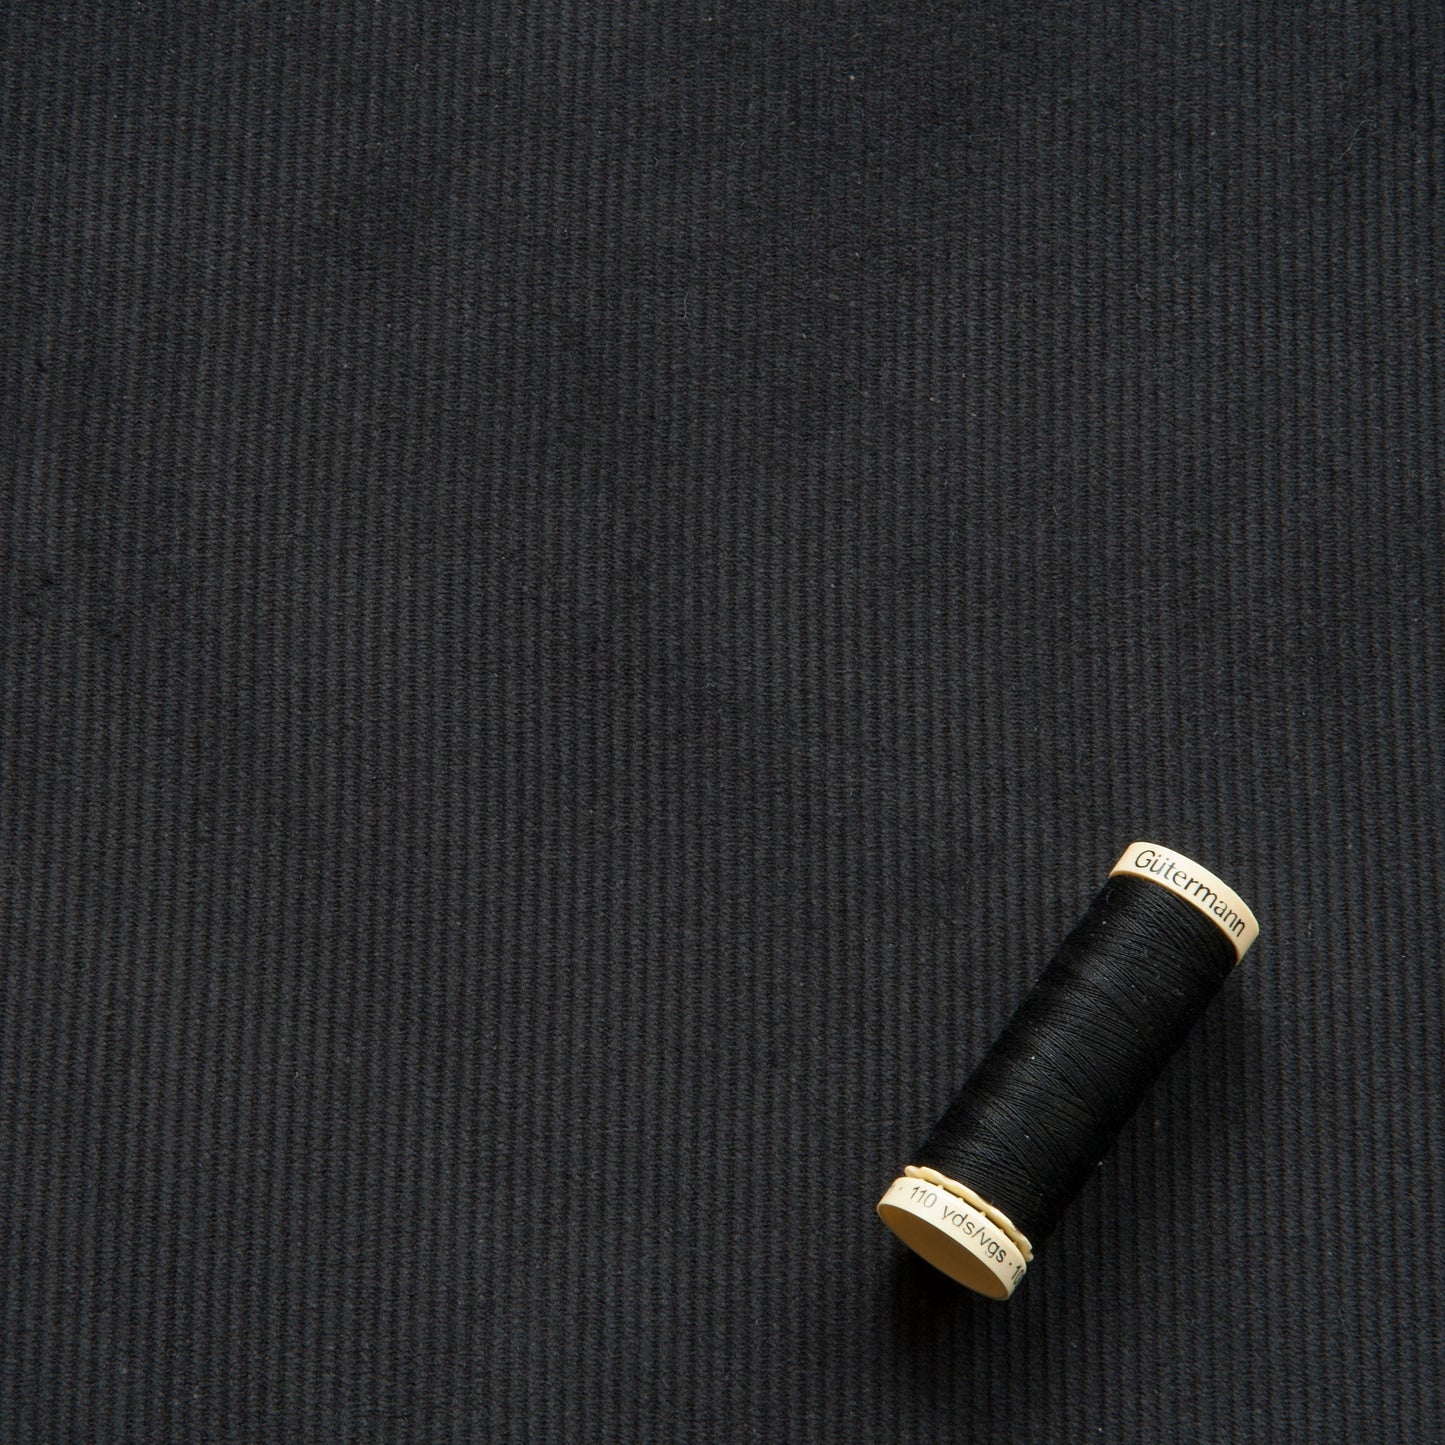 Cotton Corduroy Fabric in Black - 85cm Piece